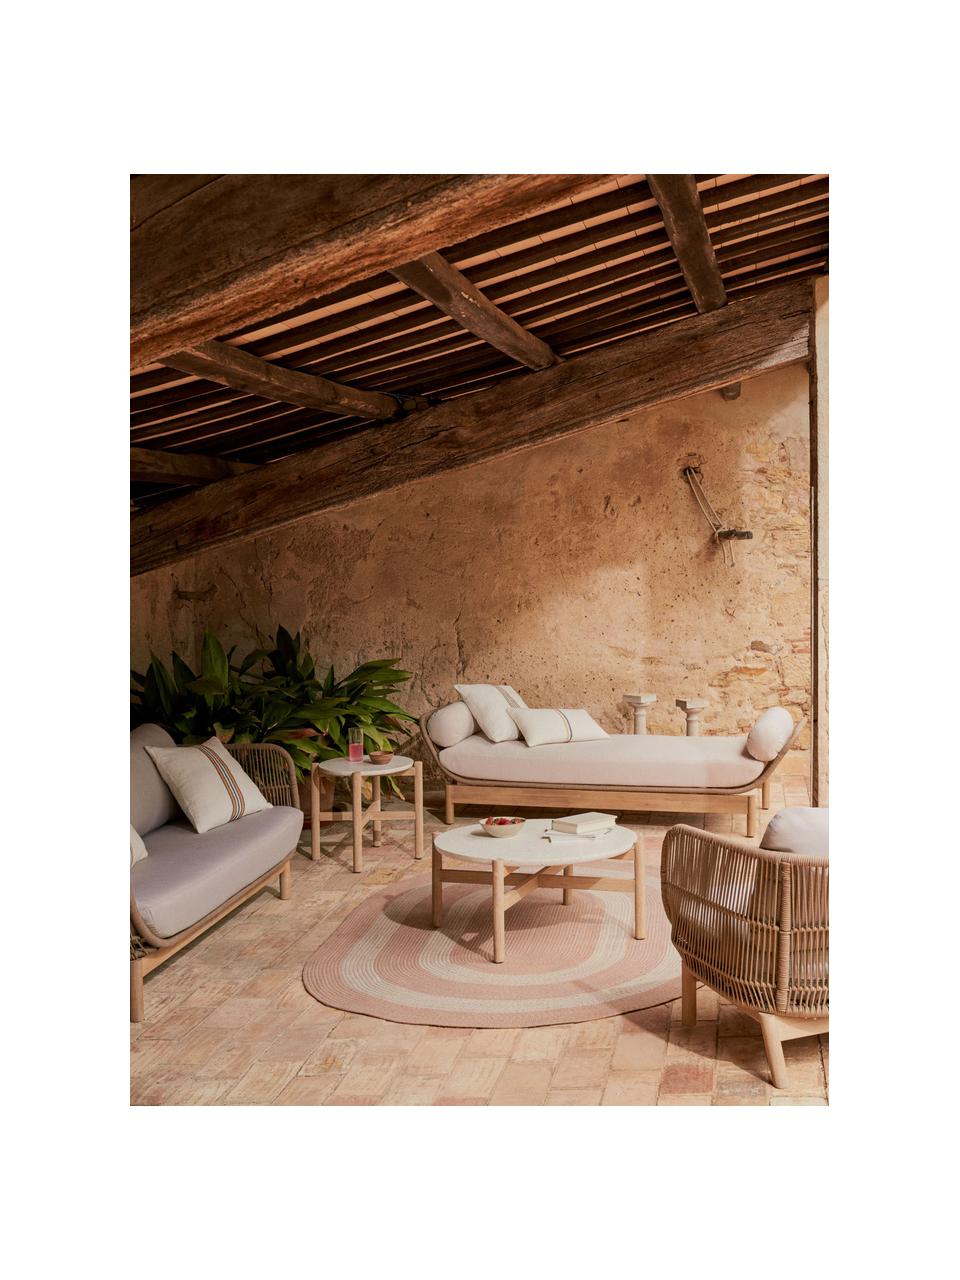 Sofá lounge para exterior Catalina (3 plazas), Tapizado: 100% poliéster, Estructura: madera de acacia, Tejido blanco crema, madera de acacia, An 208 x F 70 cm